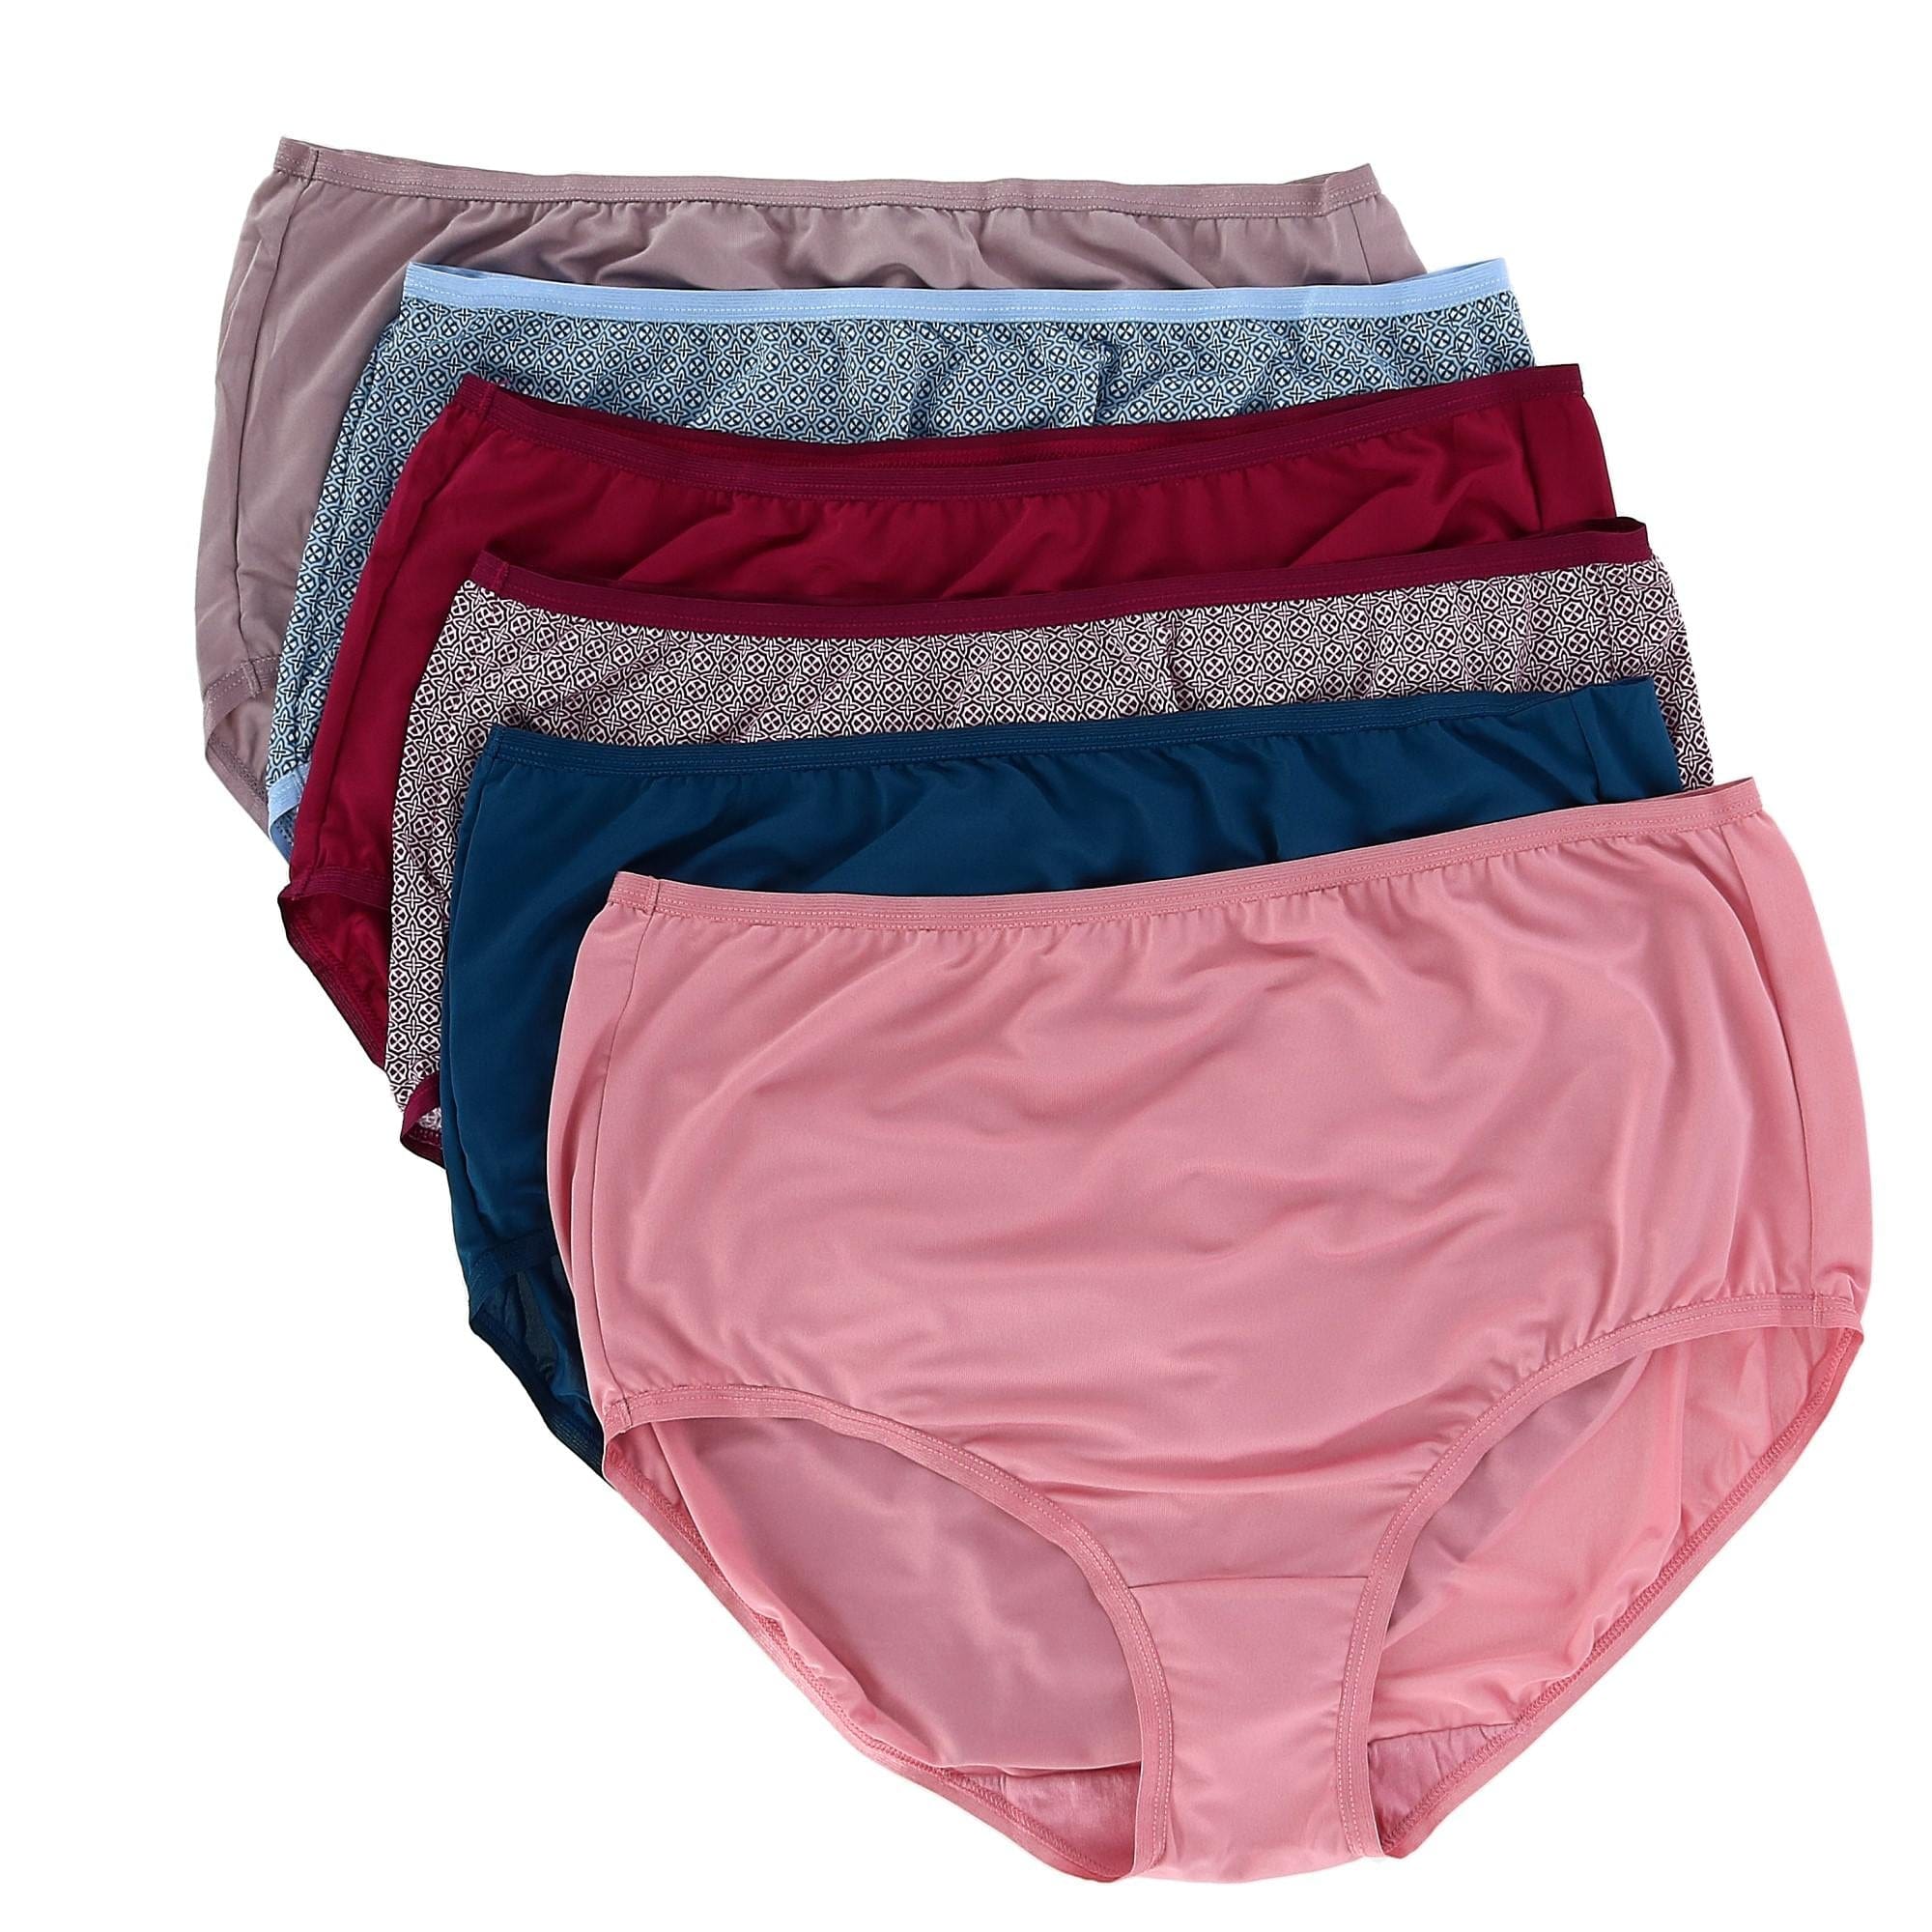 Women's Microfiber Brief Underwear (6 Pack) by Fruit of the Loom ...